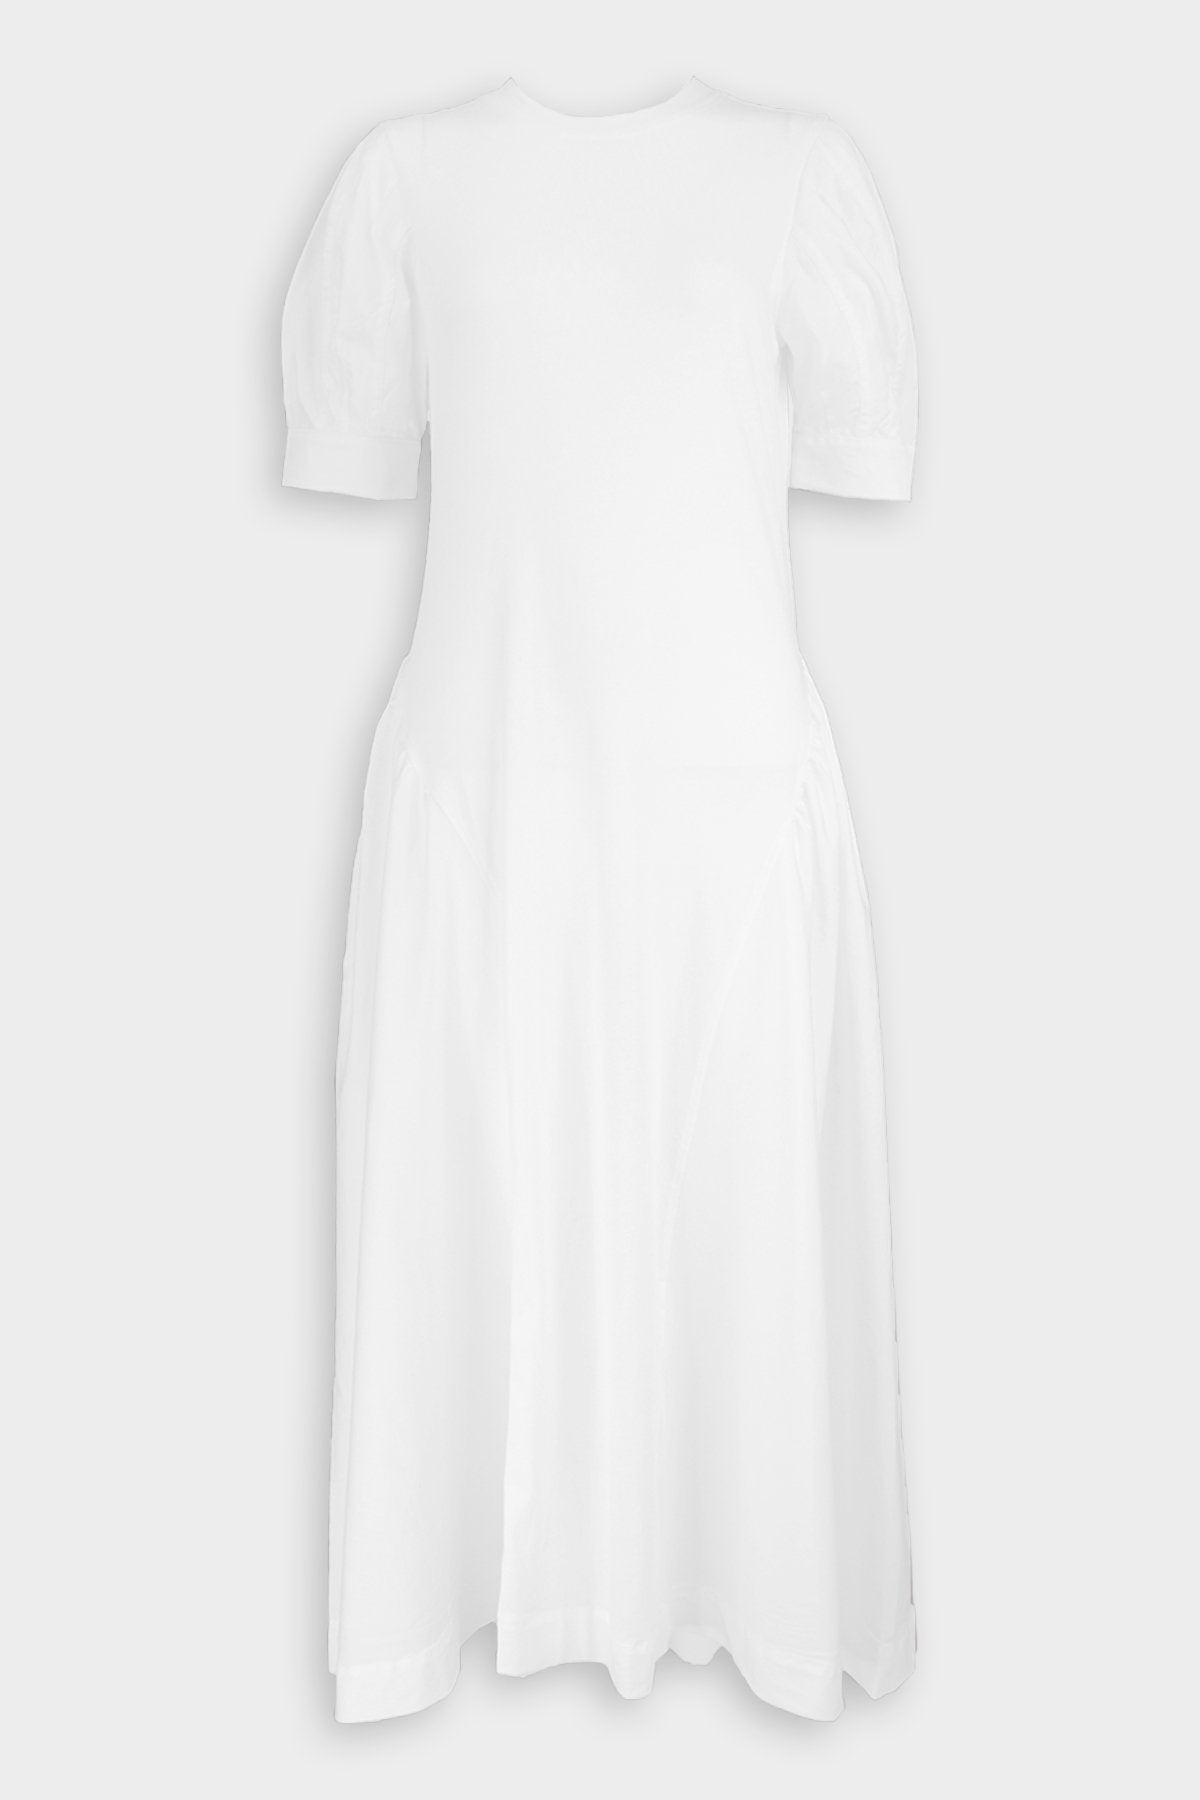 Monty Mixed Media Short Sleeve Dress in White - shop-olivia.com